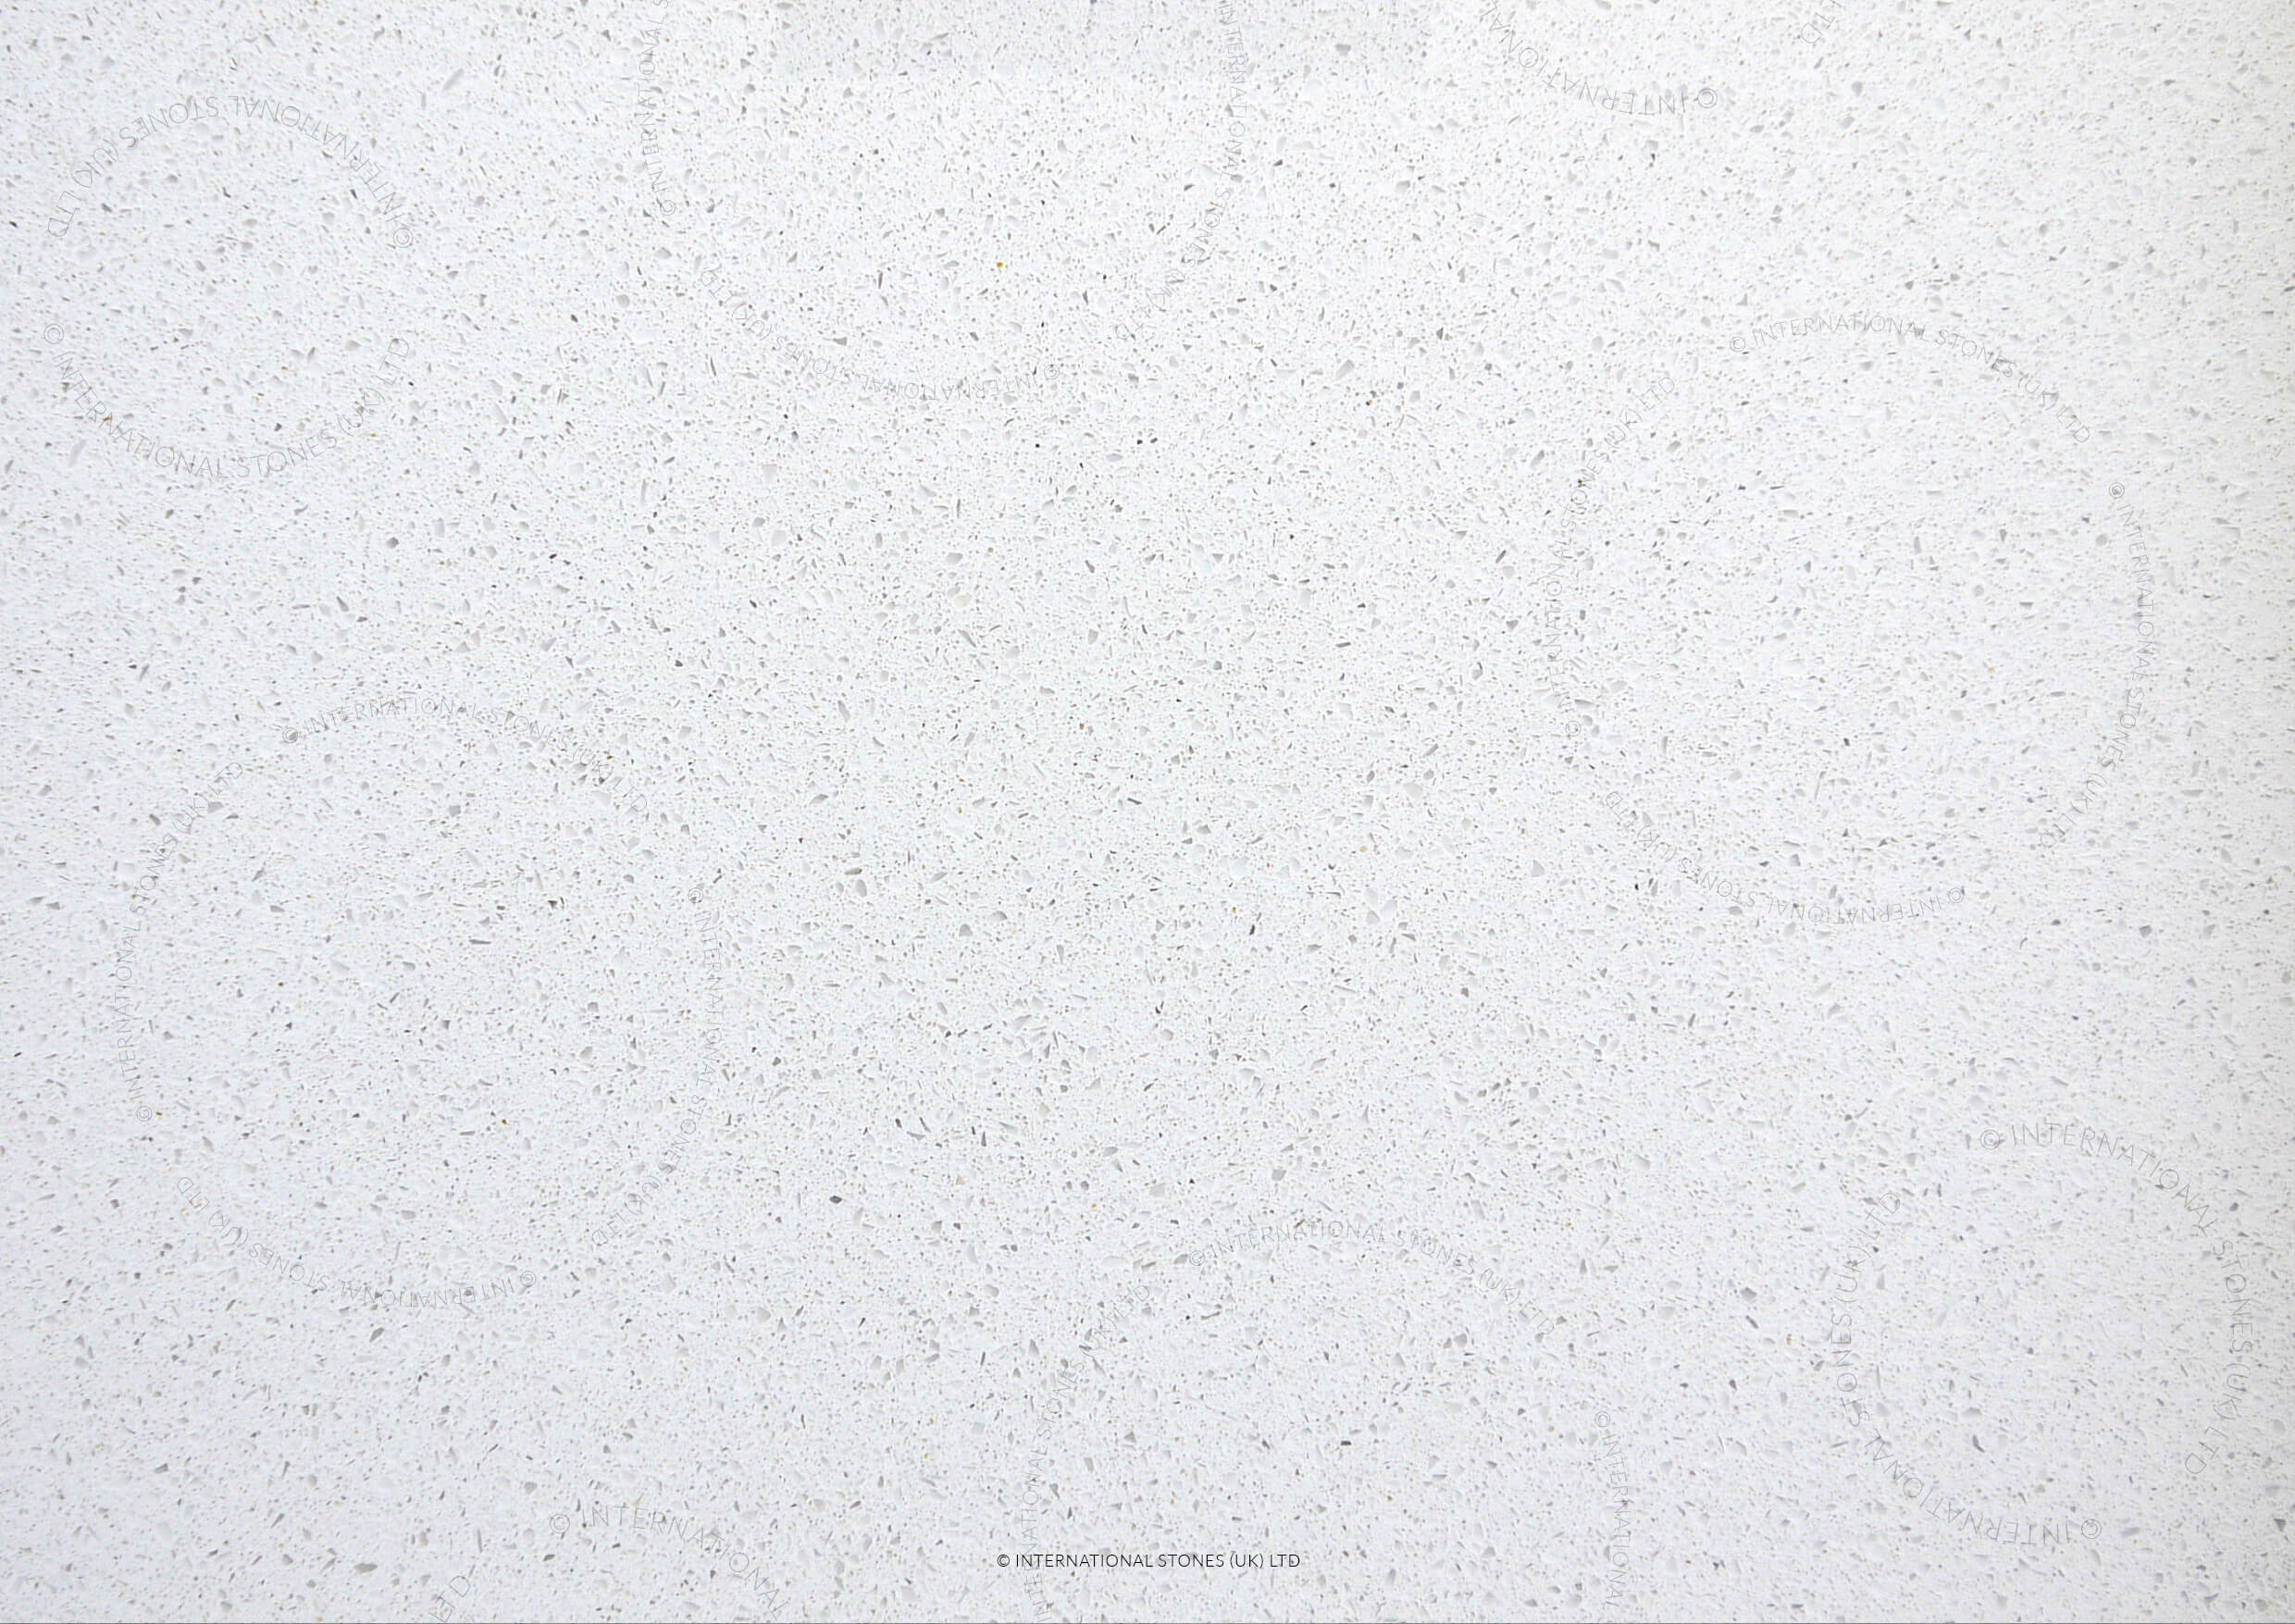 International Stone IQ Blanco Maple - cambridgeshire - Huntingdon